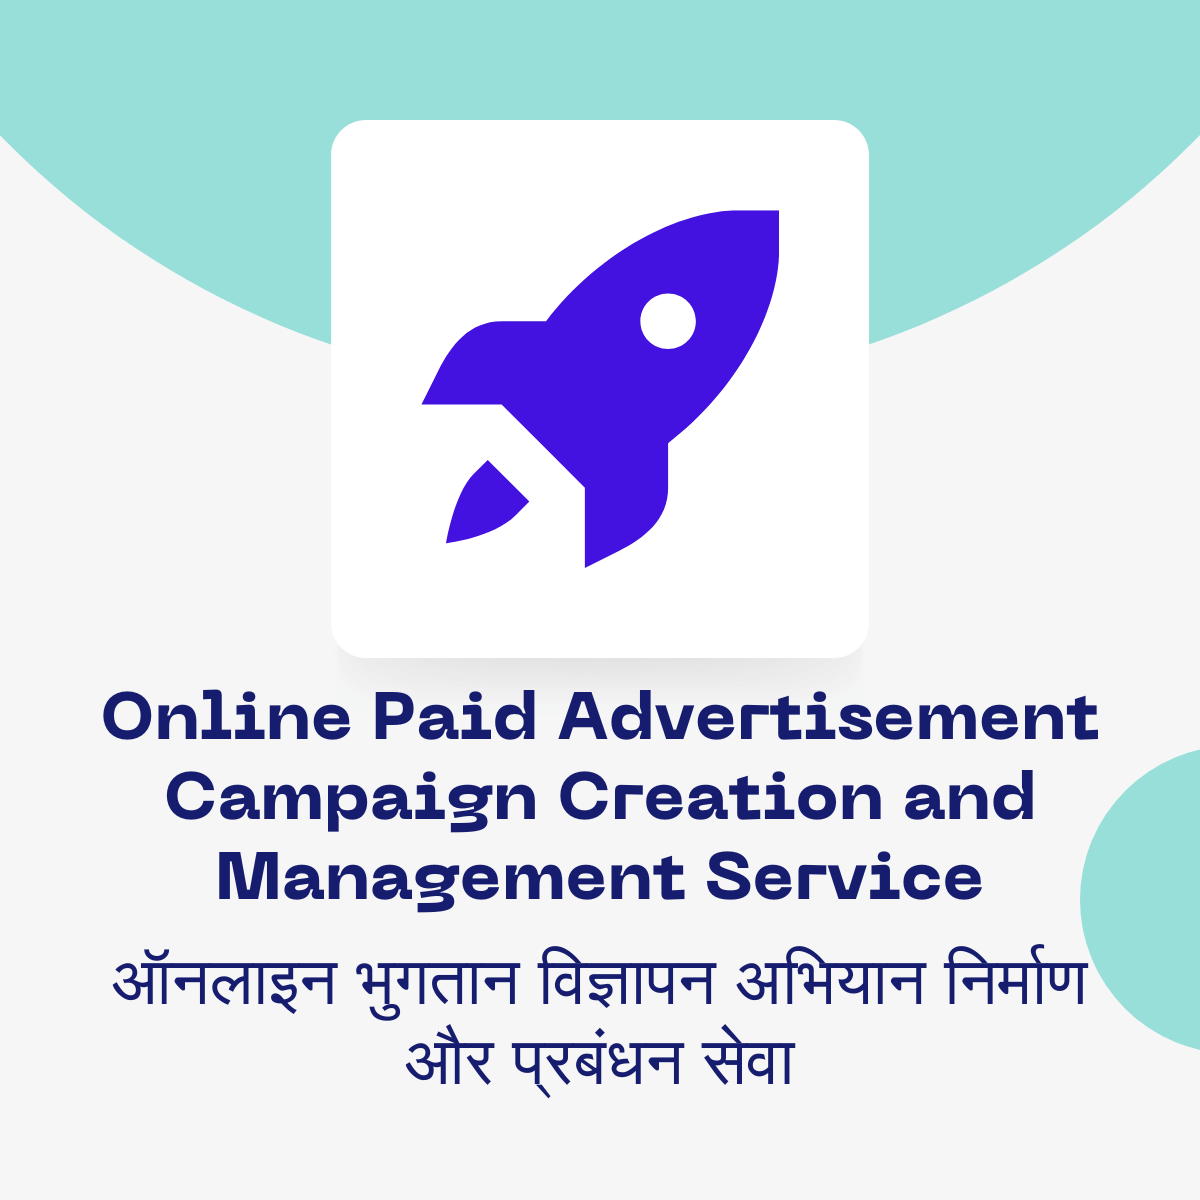 Online Paid Advertisement Campaign Creation and Management Service ऑनलाइन भुगतान विज्ञापन अभियान निर्माण और प्रबंधन सेवा